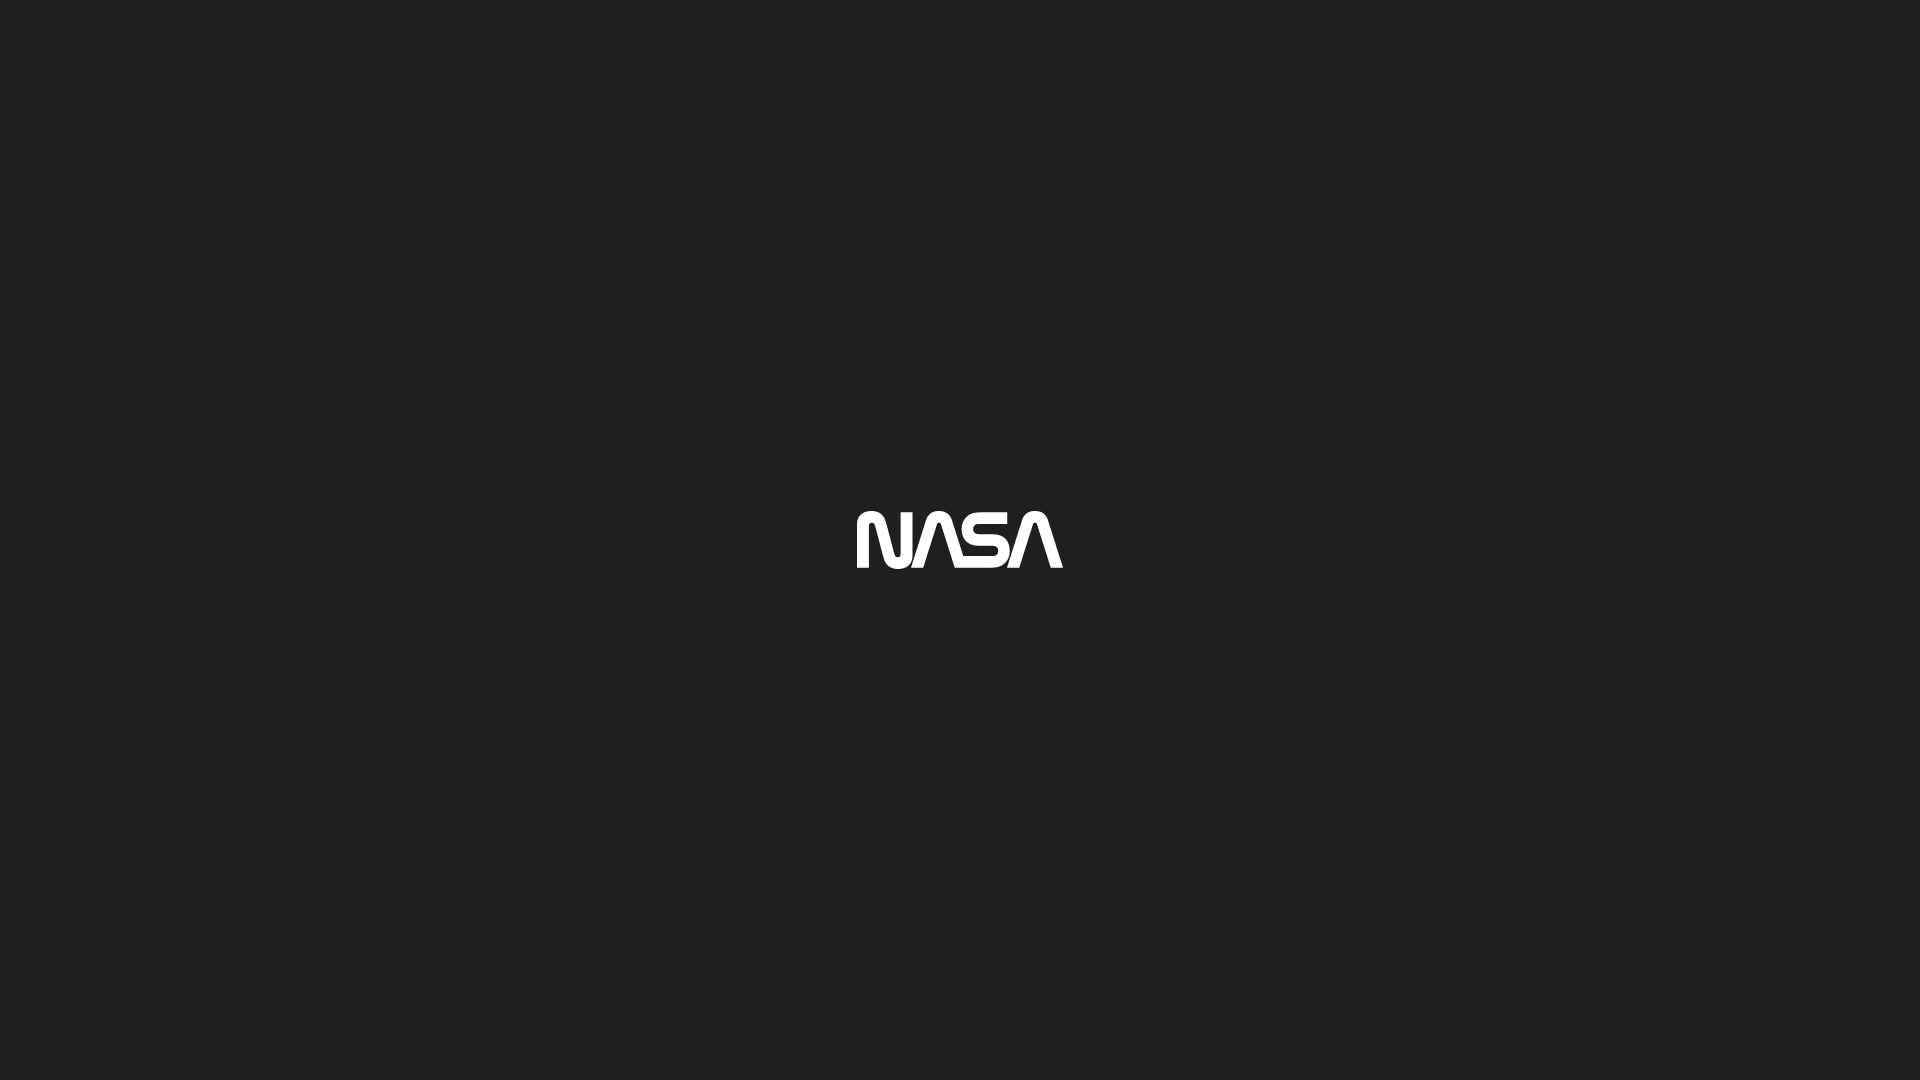 General 1920x1080 NASA logo simple background minimalism black background